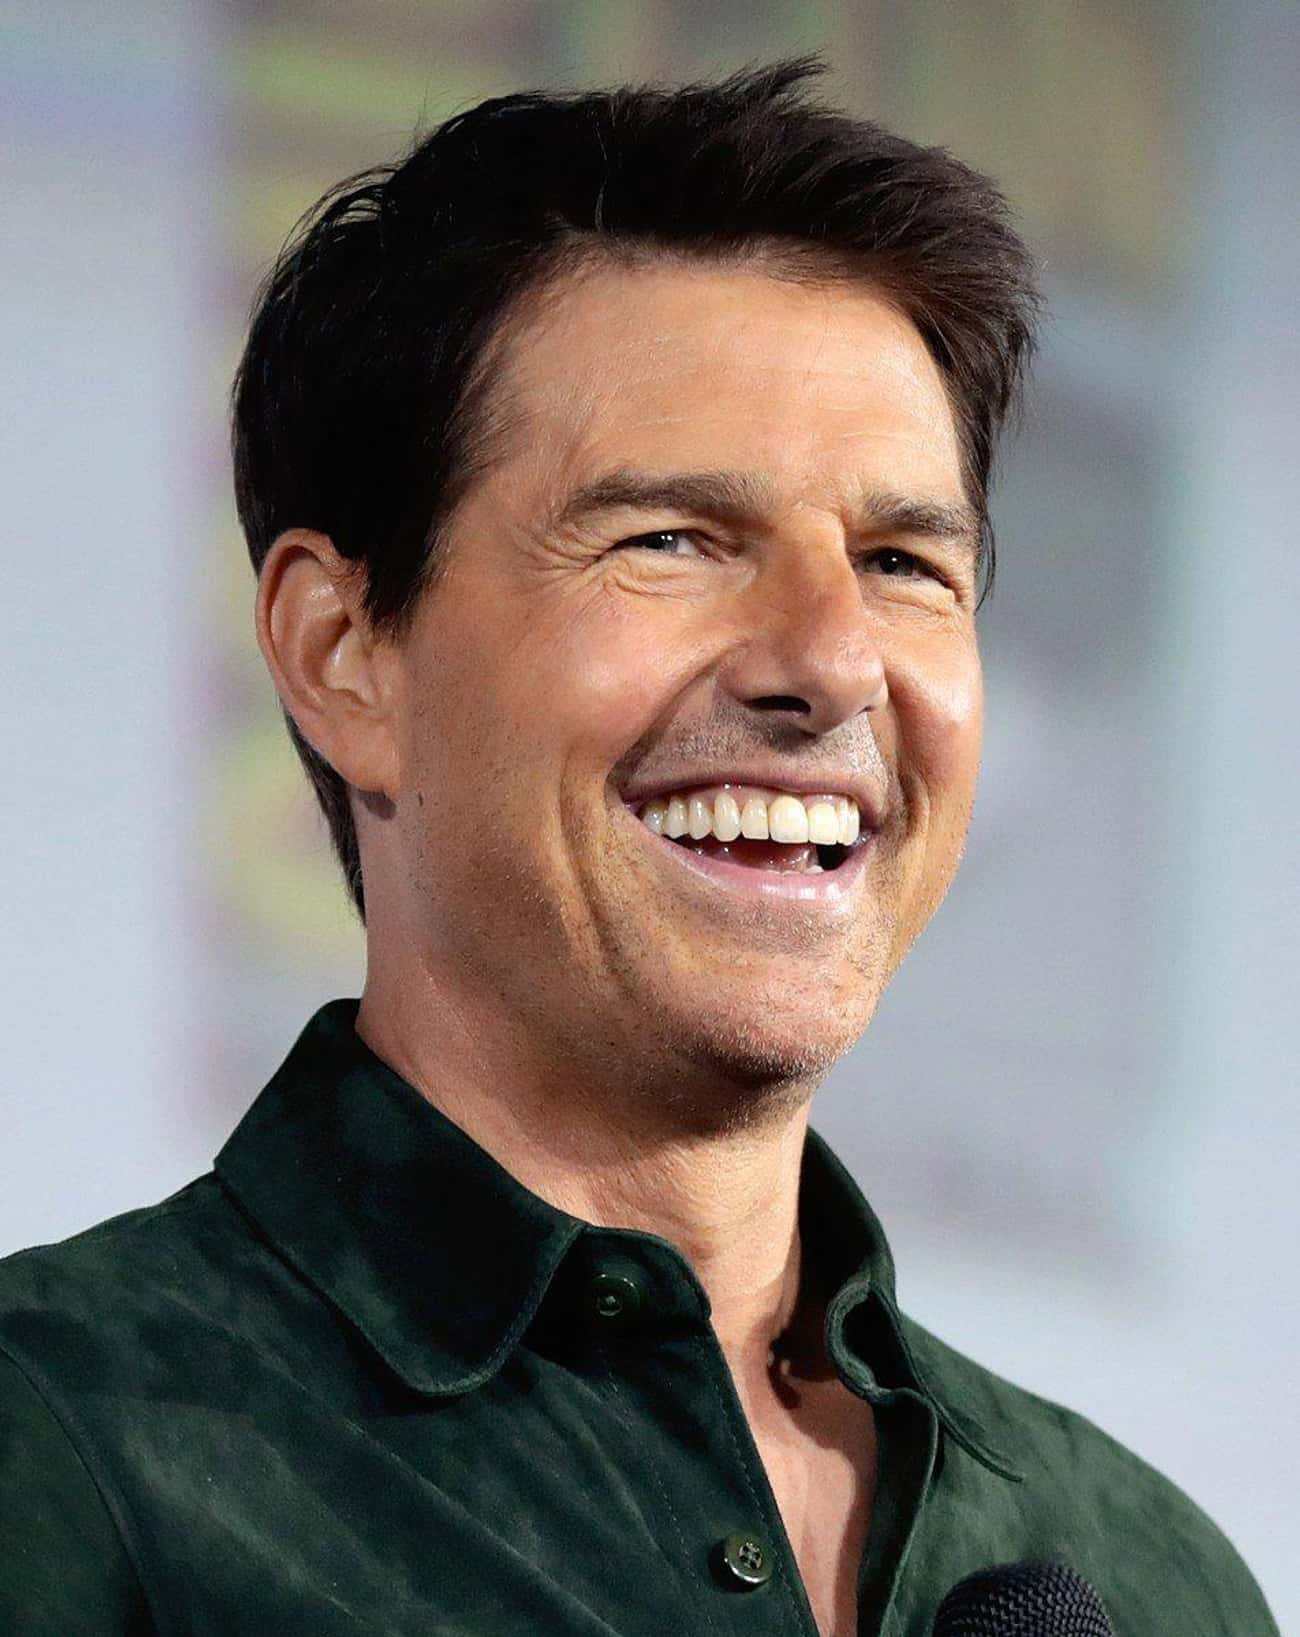 Tom Cruise's Anti-Psychiatry Stance